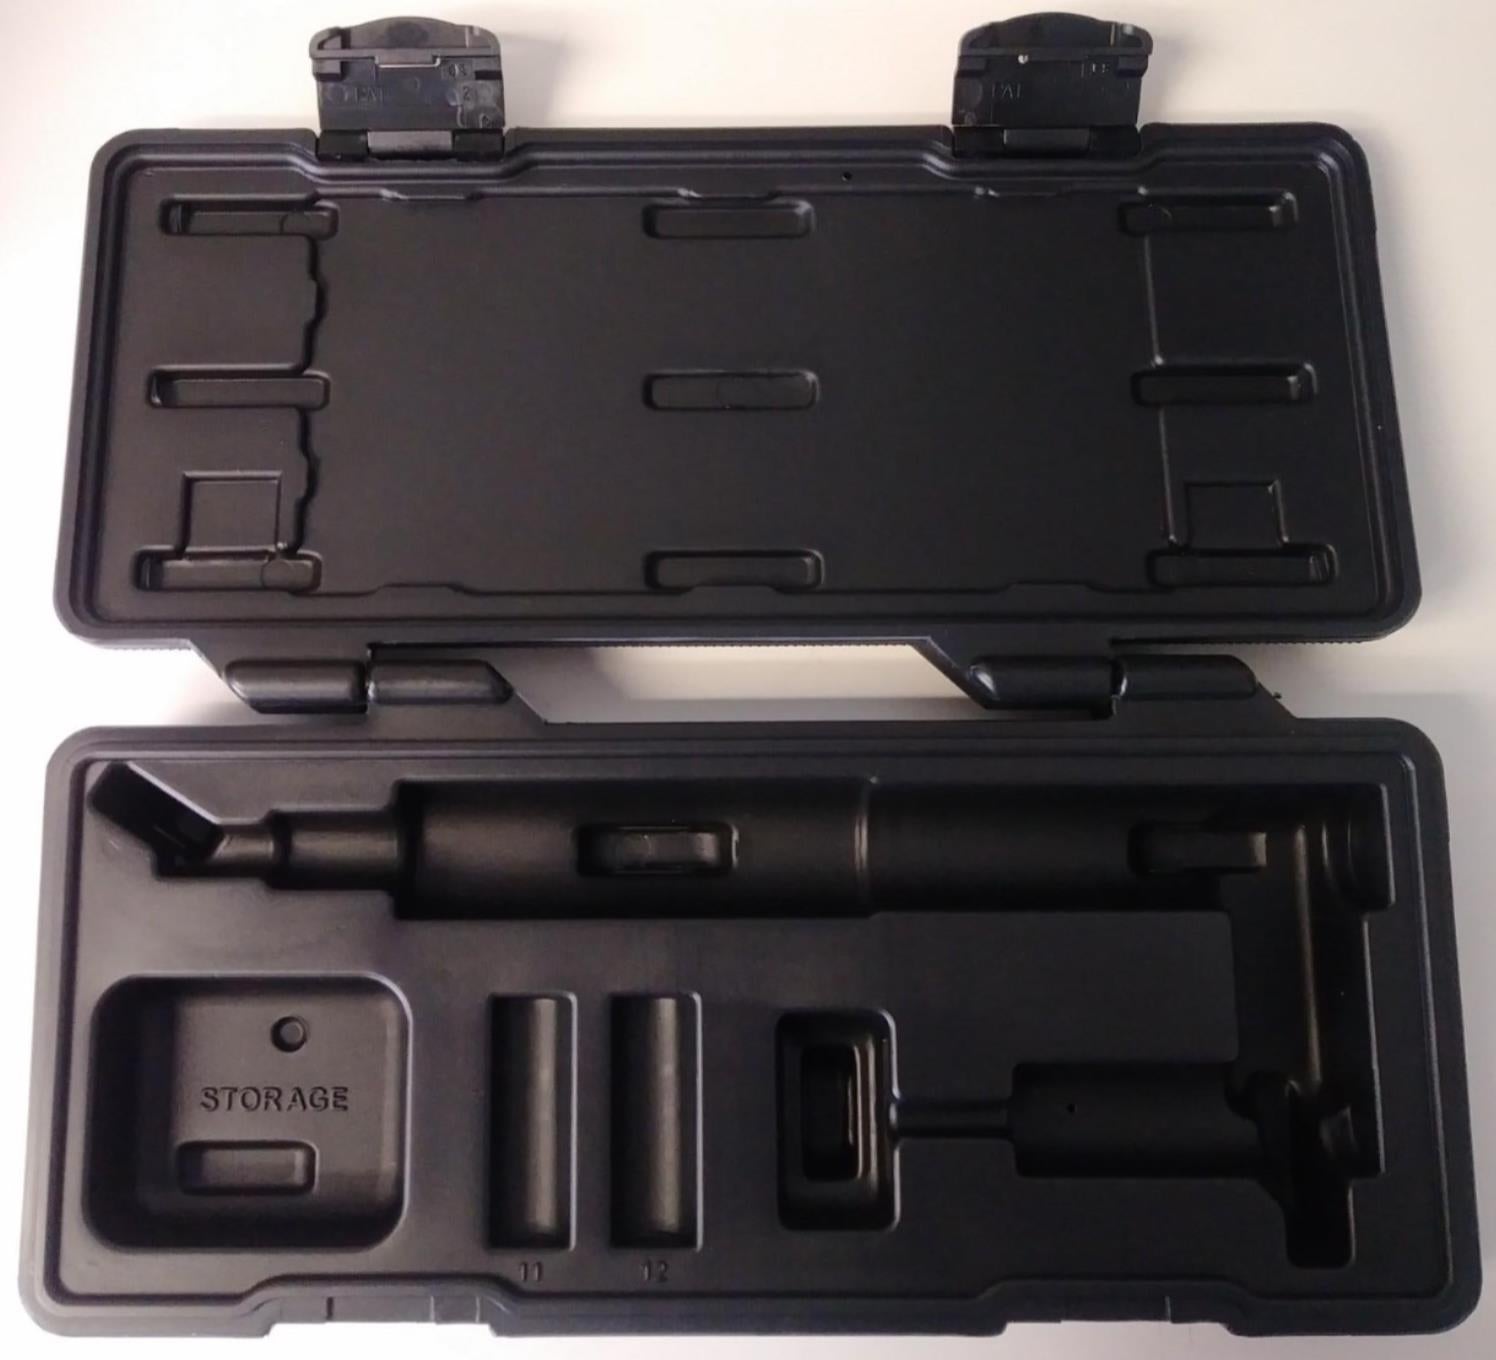 NAPA 8005912 Black Plastic Blow Mold Case For Tire Pressure Monitoring System